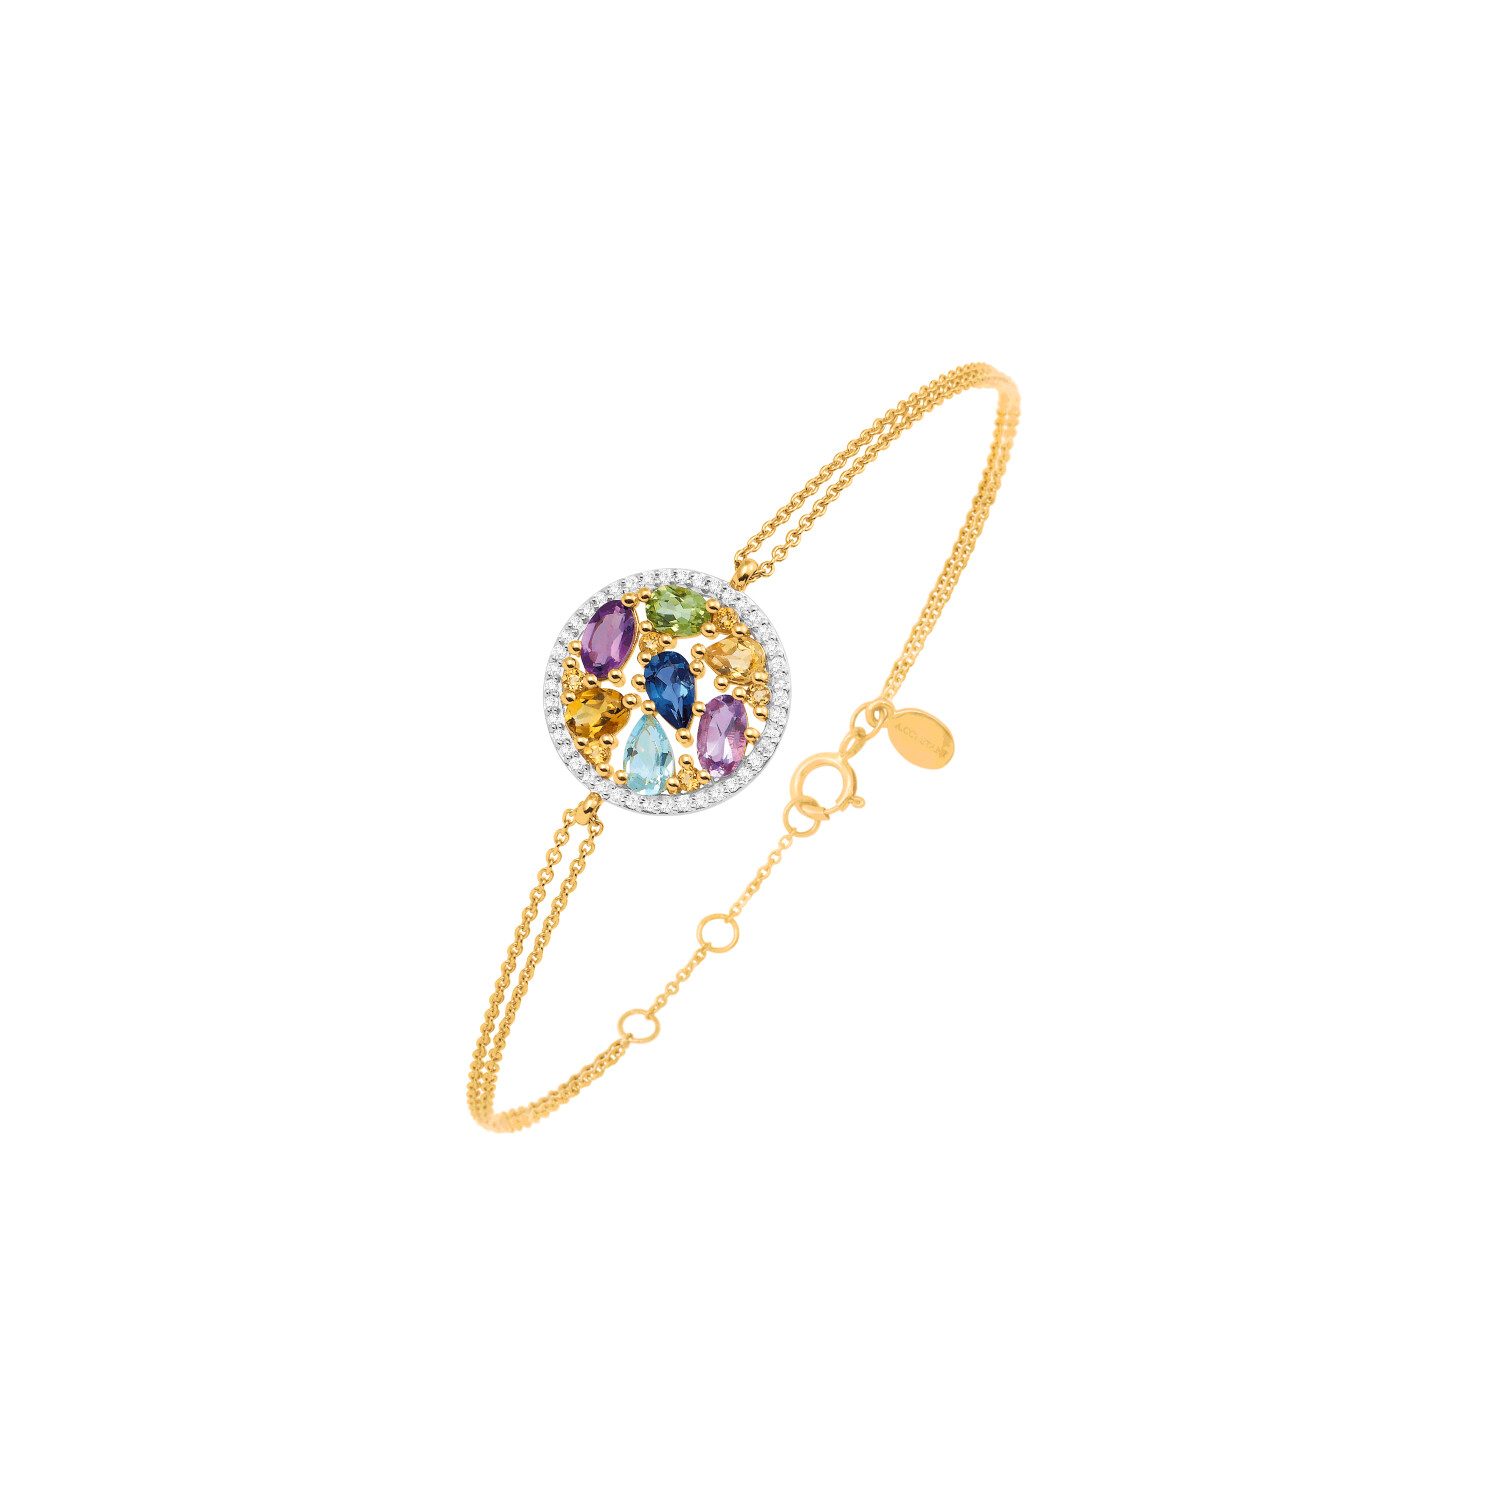 Bracelet or jaune, diamants et pierres multicolores vue 1